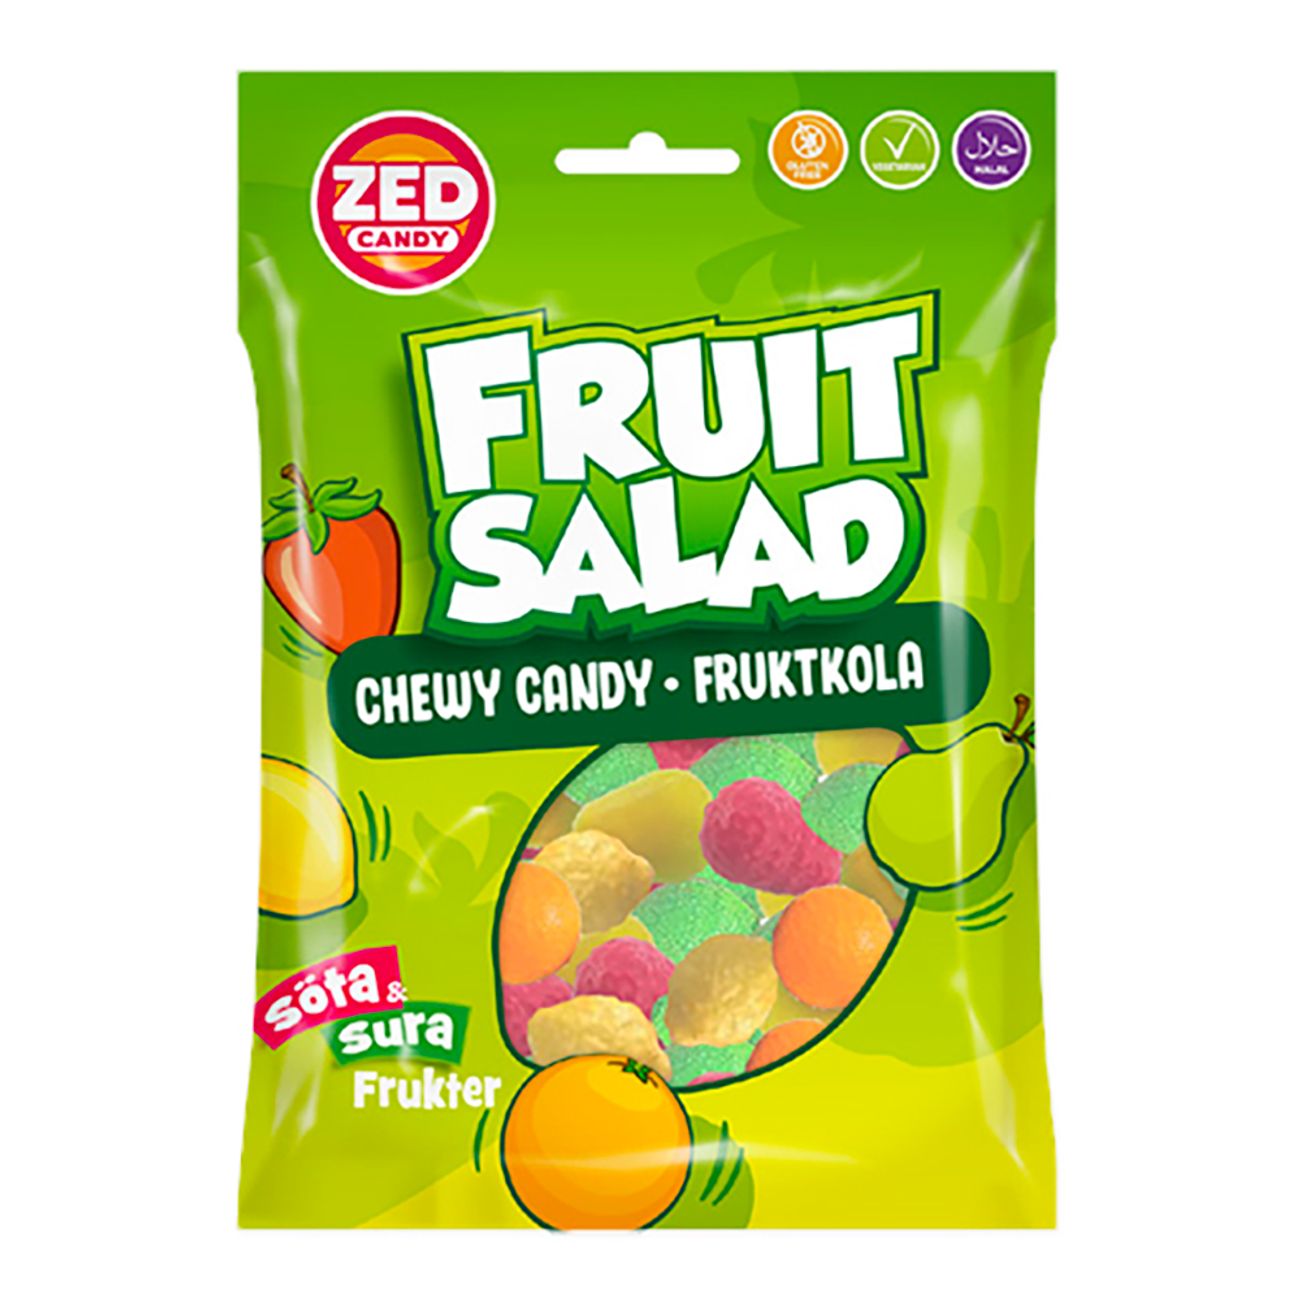 fruit-salad-fruktkola-82489-1